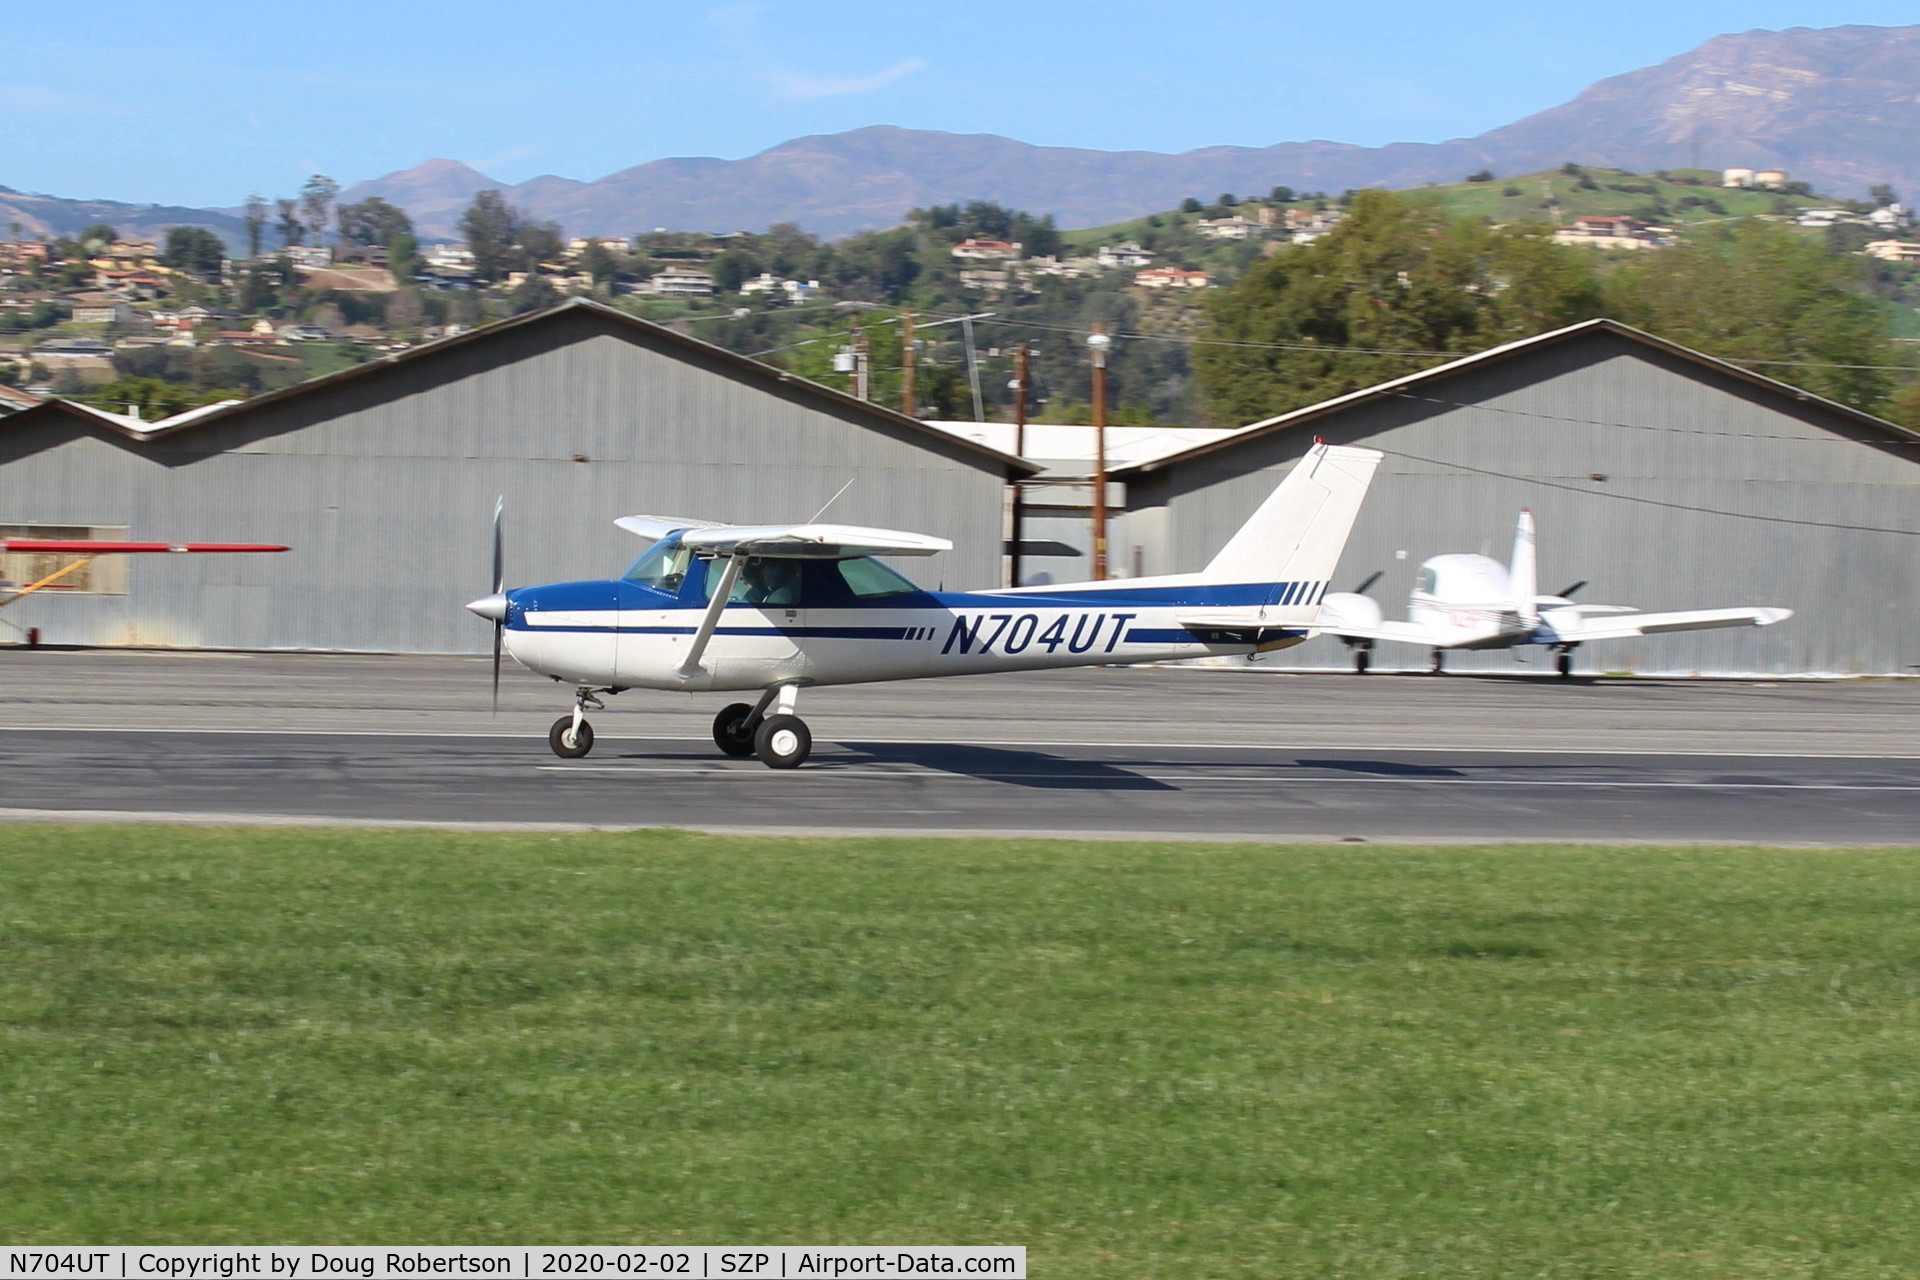 N704UT, 1976 Cessna 150M C/N 15078891, 1976 Cessna 150M, Continental O-200 100 Hp, landing roll Rwy 22